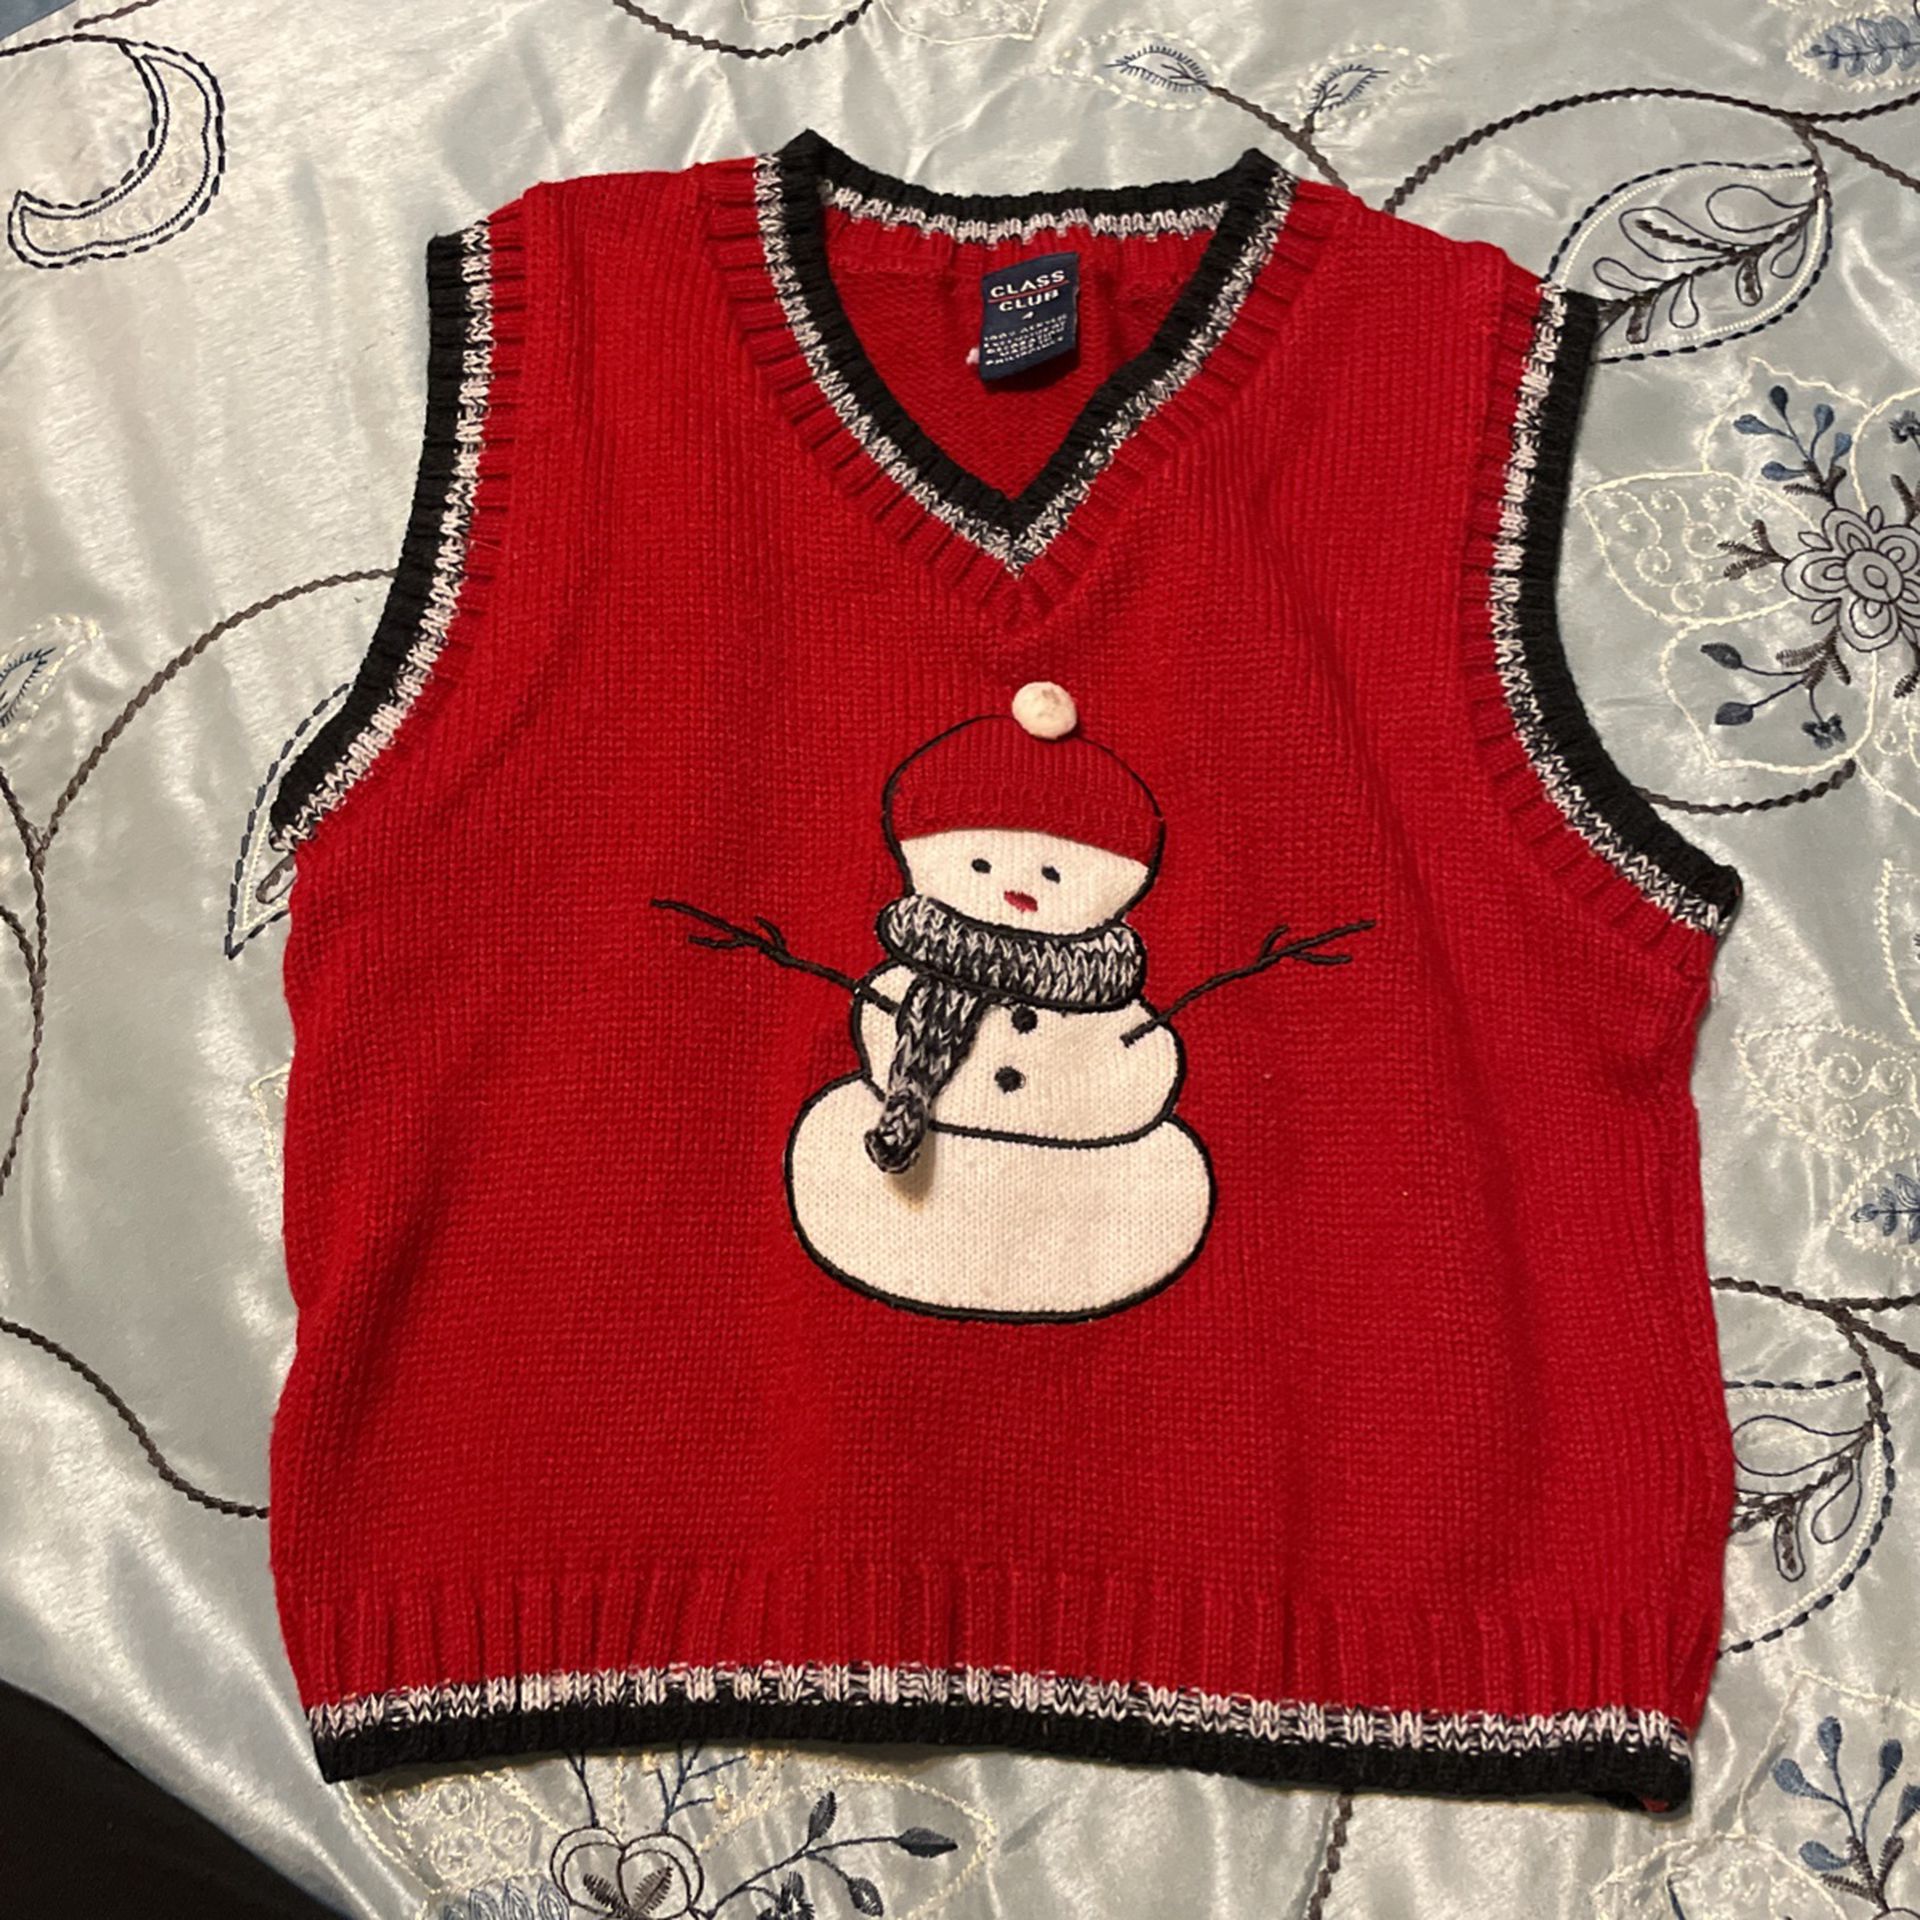 Kids Red Snowman Sweater Vest Size 4T Class Club